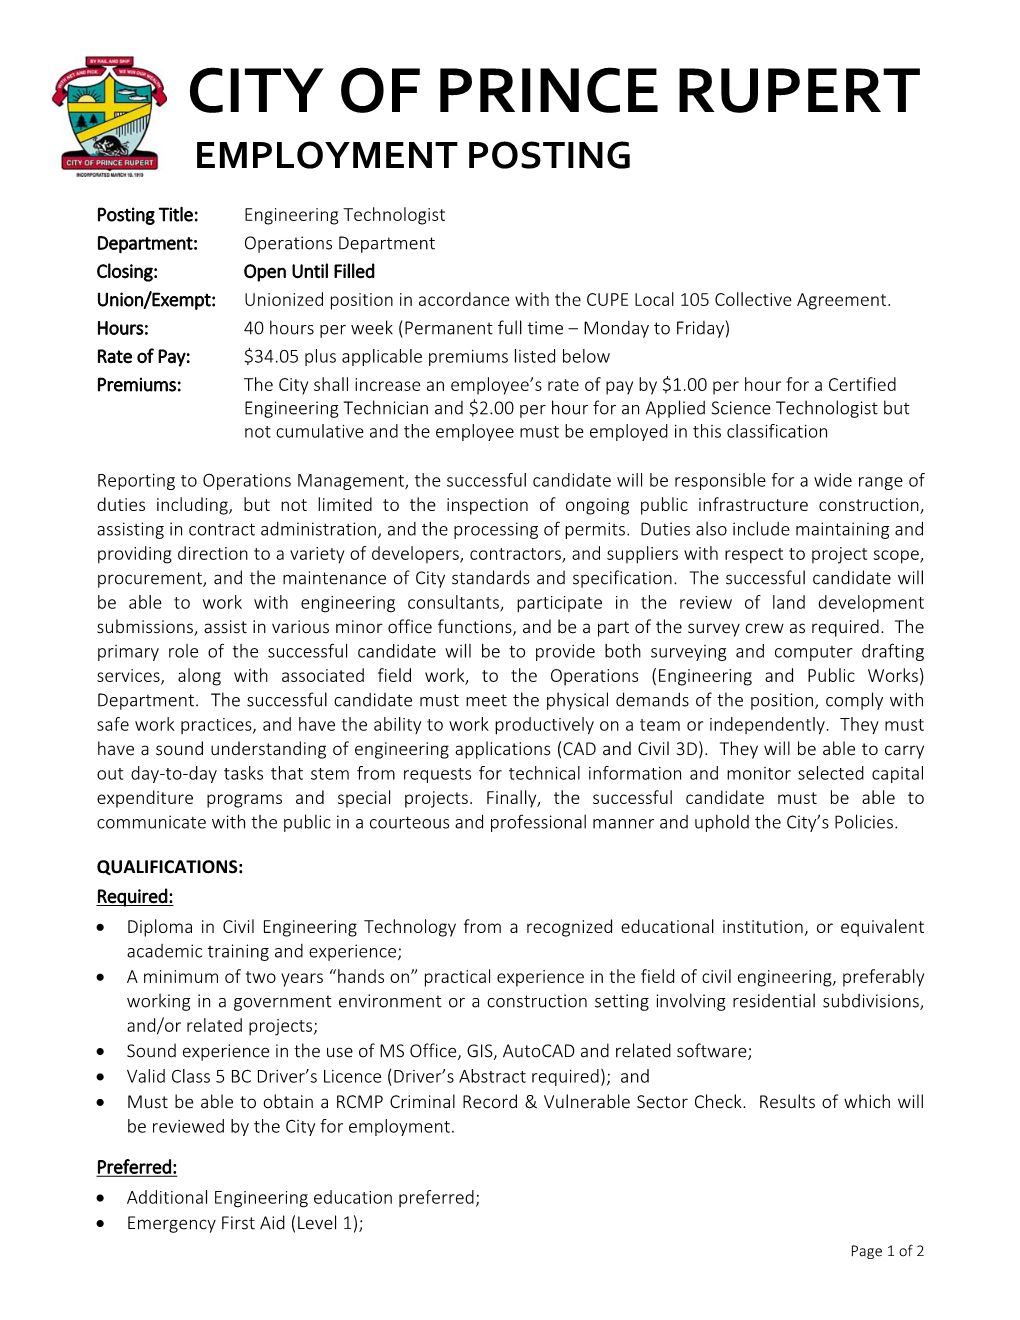 City of Prince Rupert Employment Posting